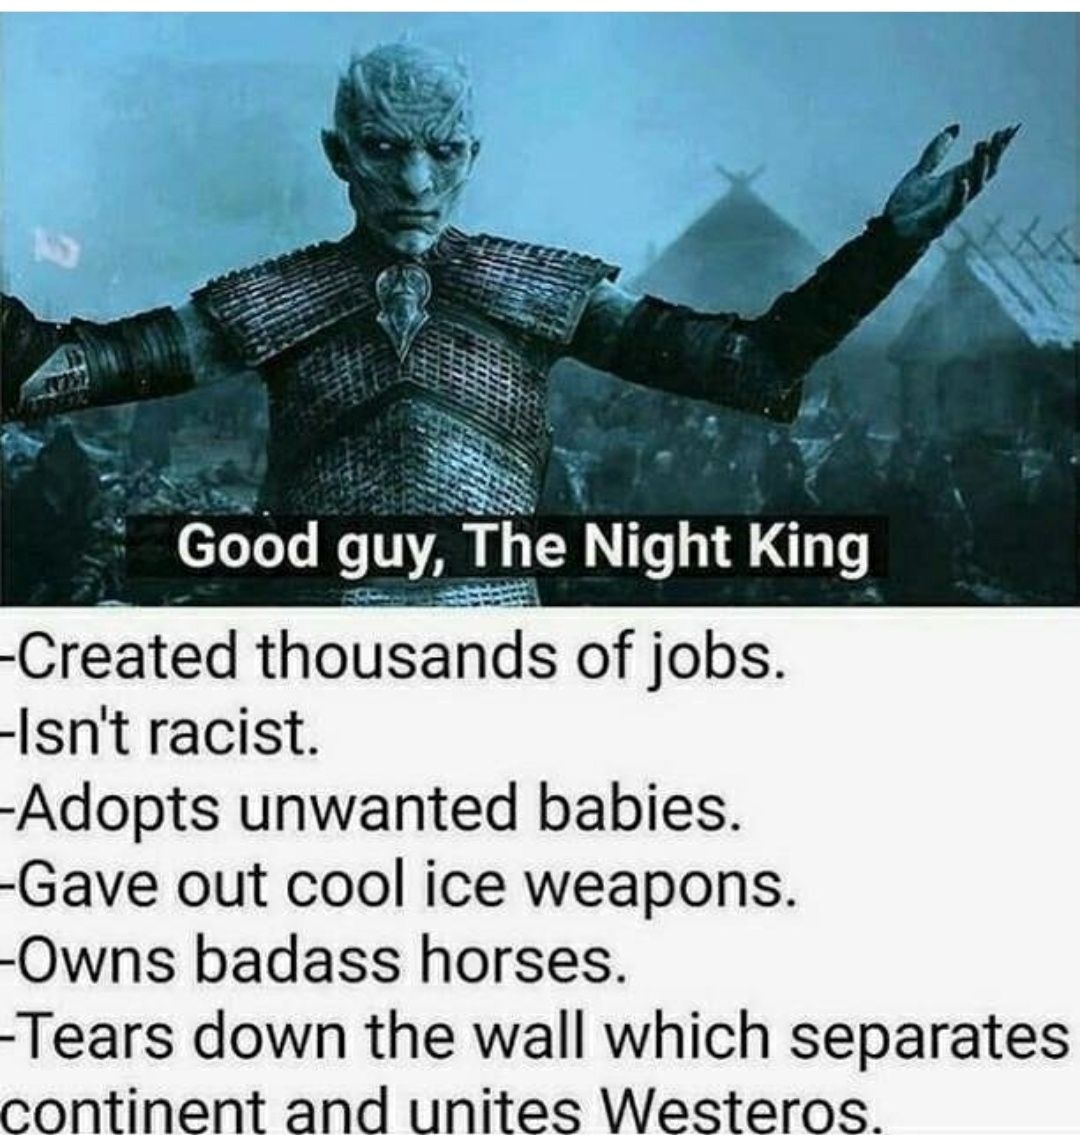 Good guy, The Night King.